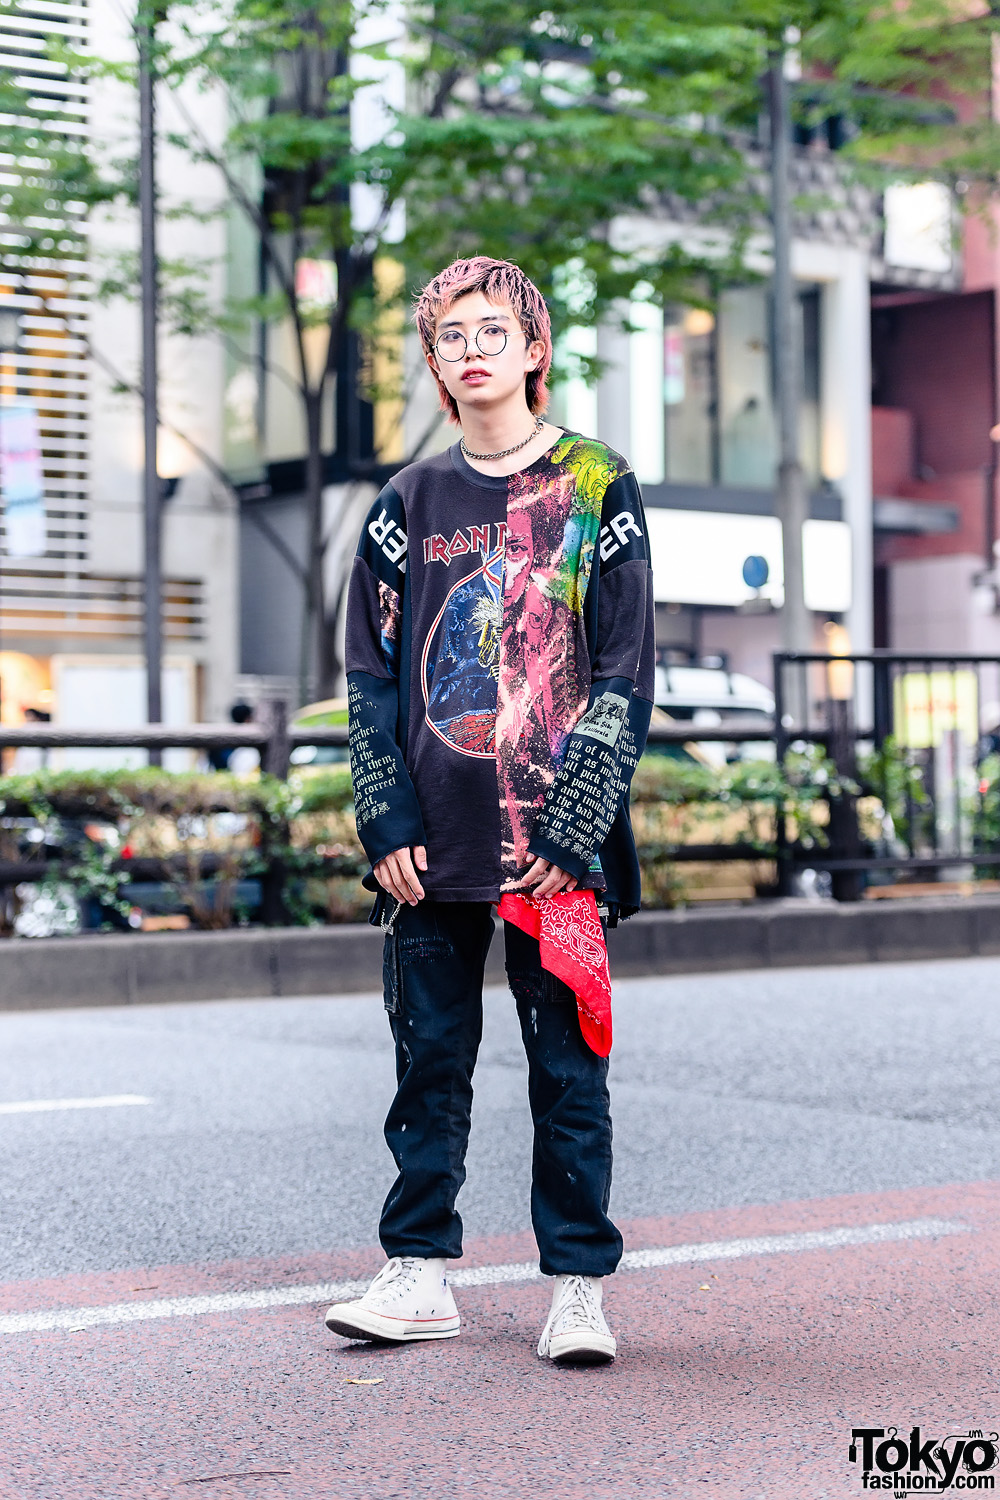 Cote Mer Tokyo Street Style w/ Pink Hair, Deconstructed Iron Maiden Sweatshirt, Silver Waist Chain & Converse Sneakers